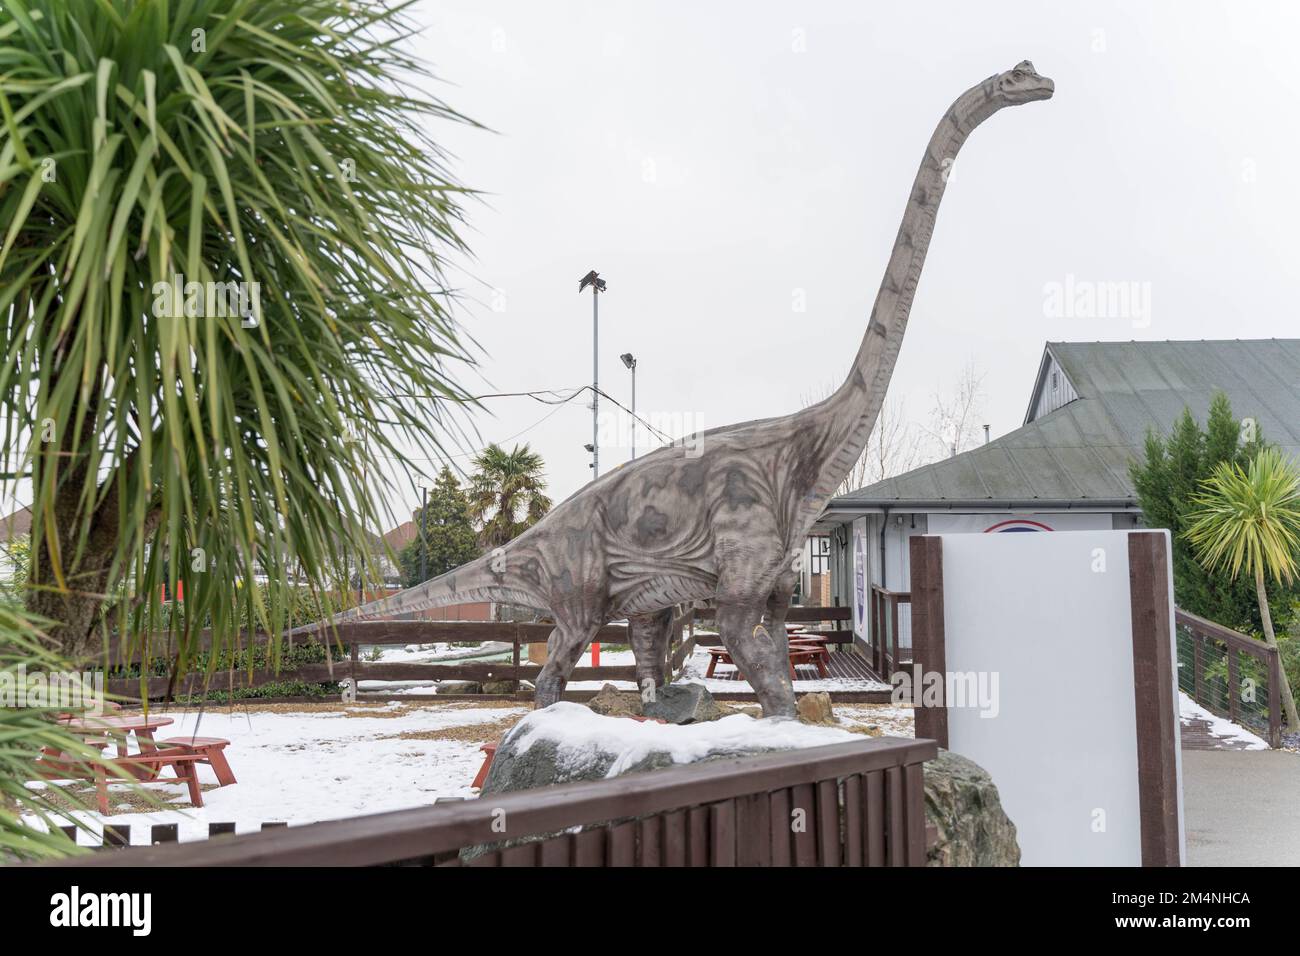 Replica of Jurassic World Dominion Brachiosaurus Dinosaur stands in snow covered ground, Kent England UK Stock Photo